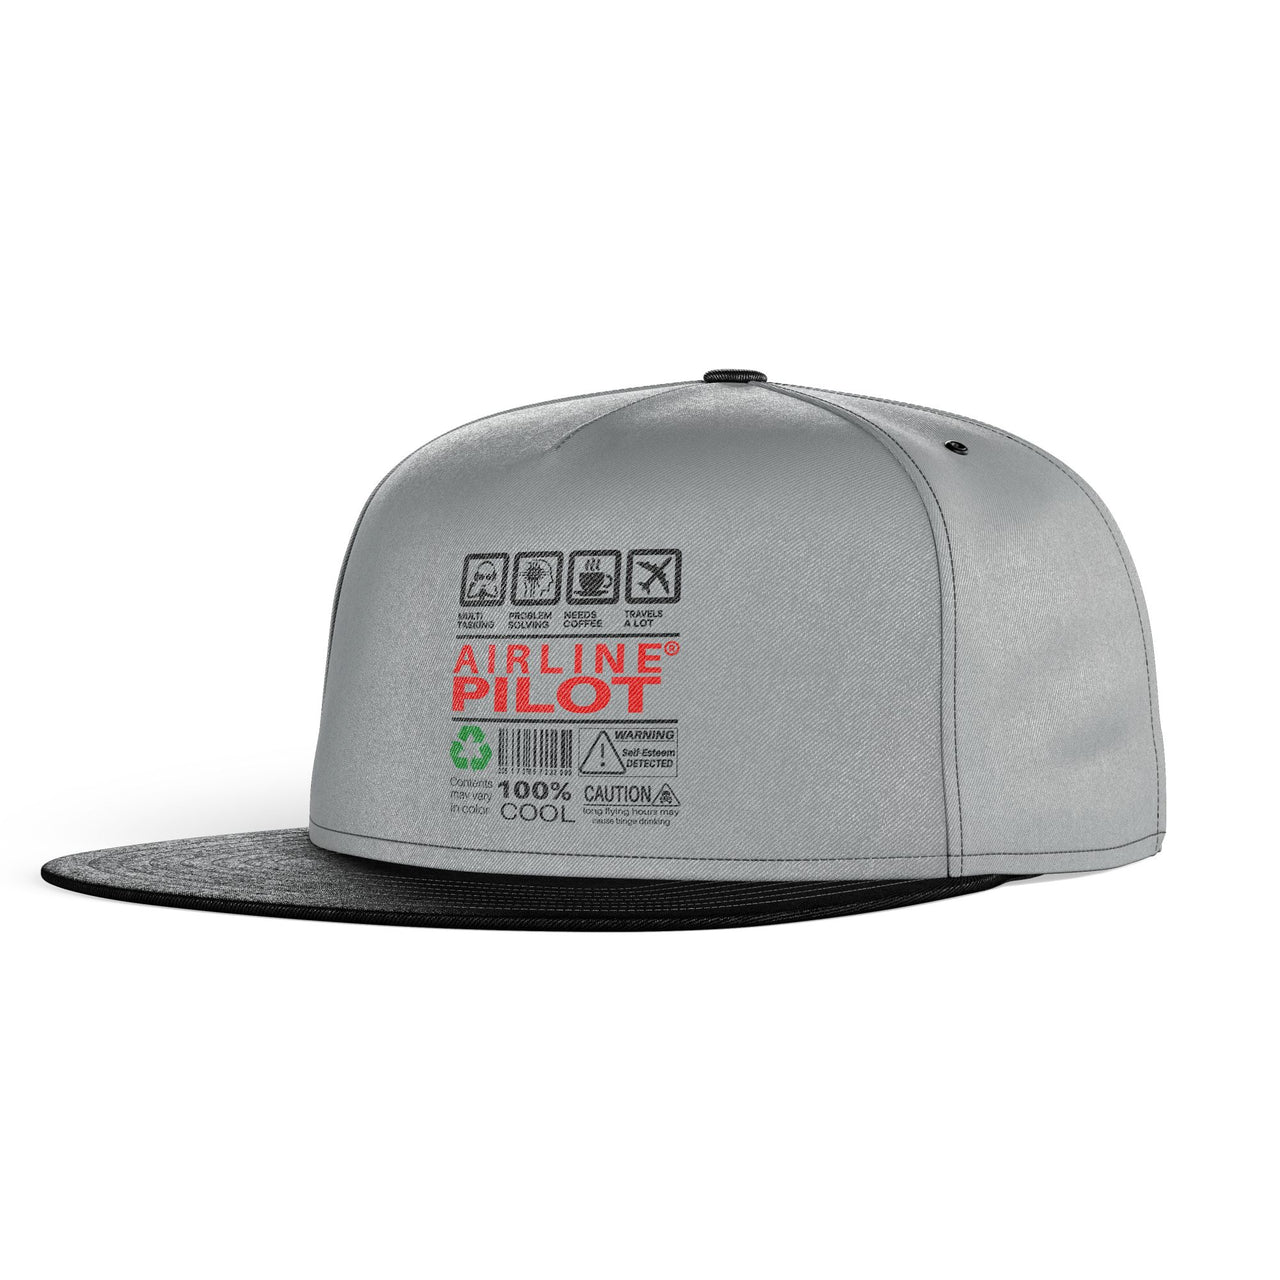 Airline Pilot Label Designed Snapback Caps & Hats